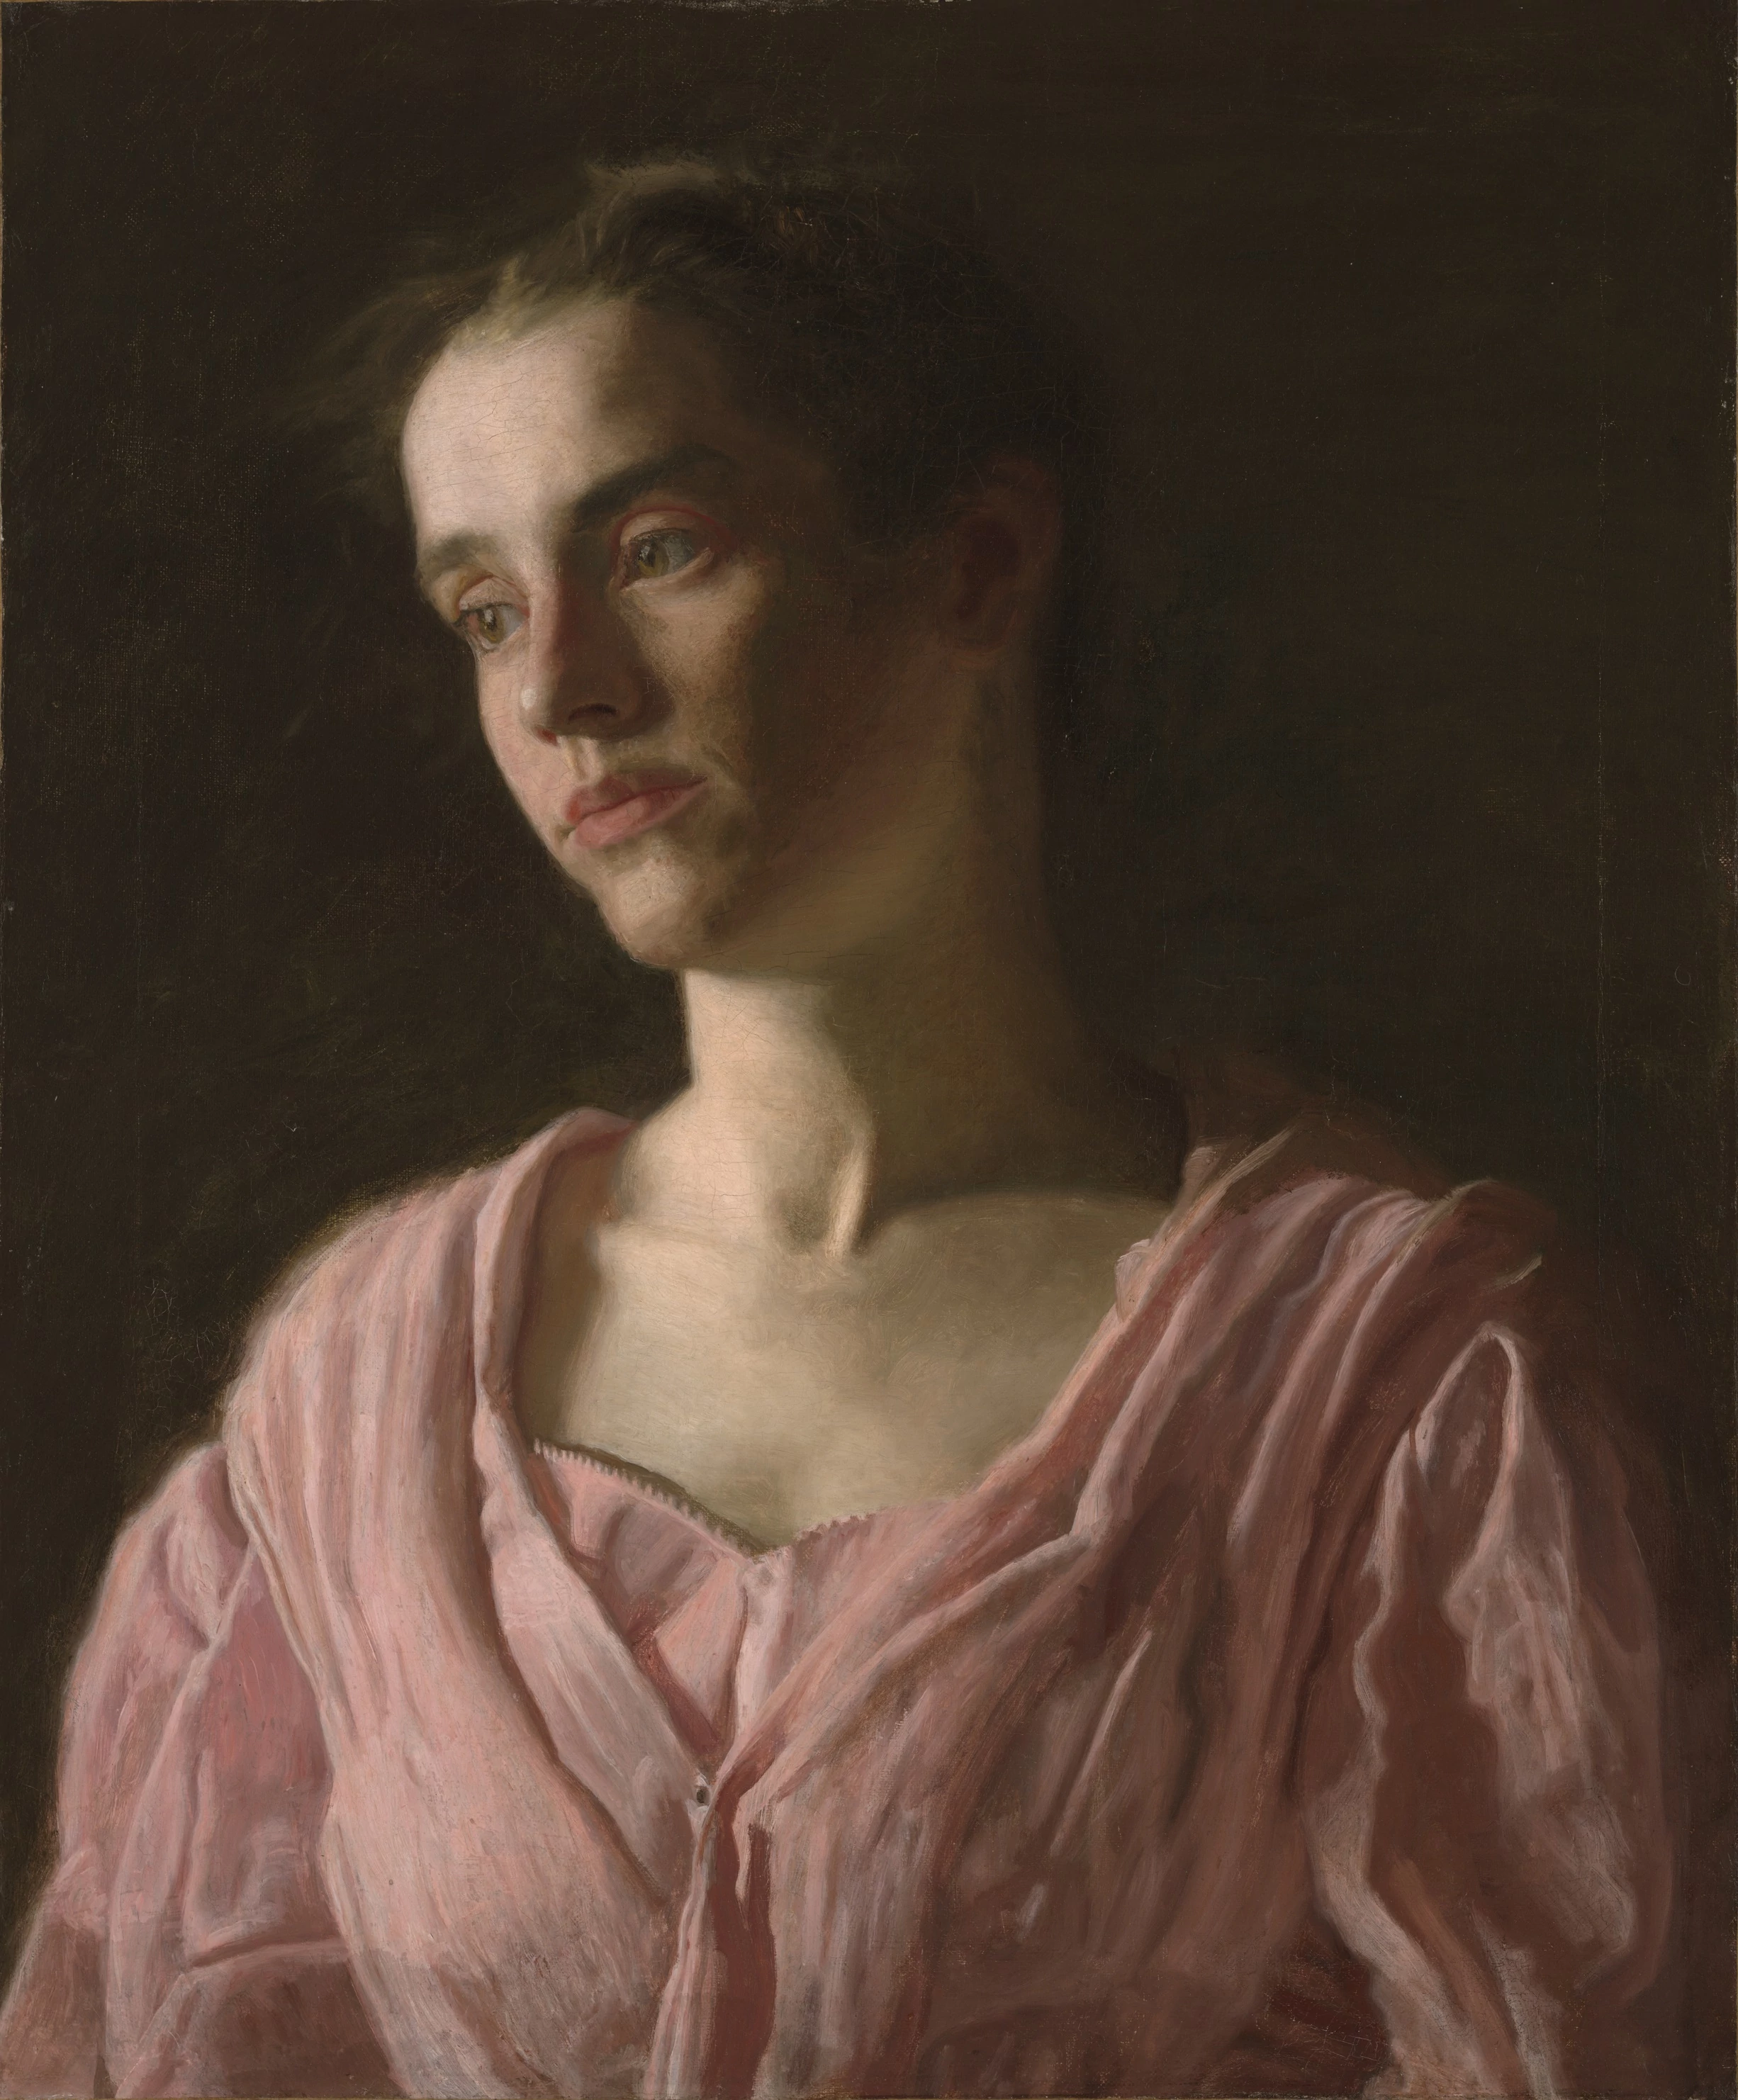 Portrait of Maud Cook, Thomas Eakins